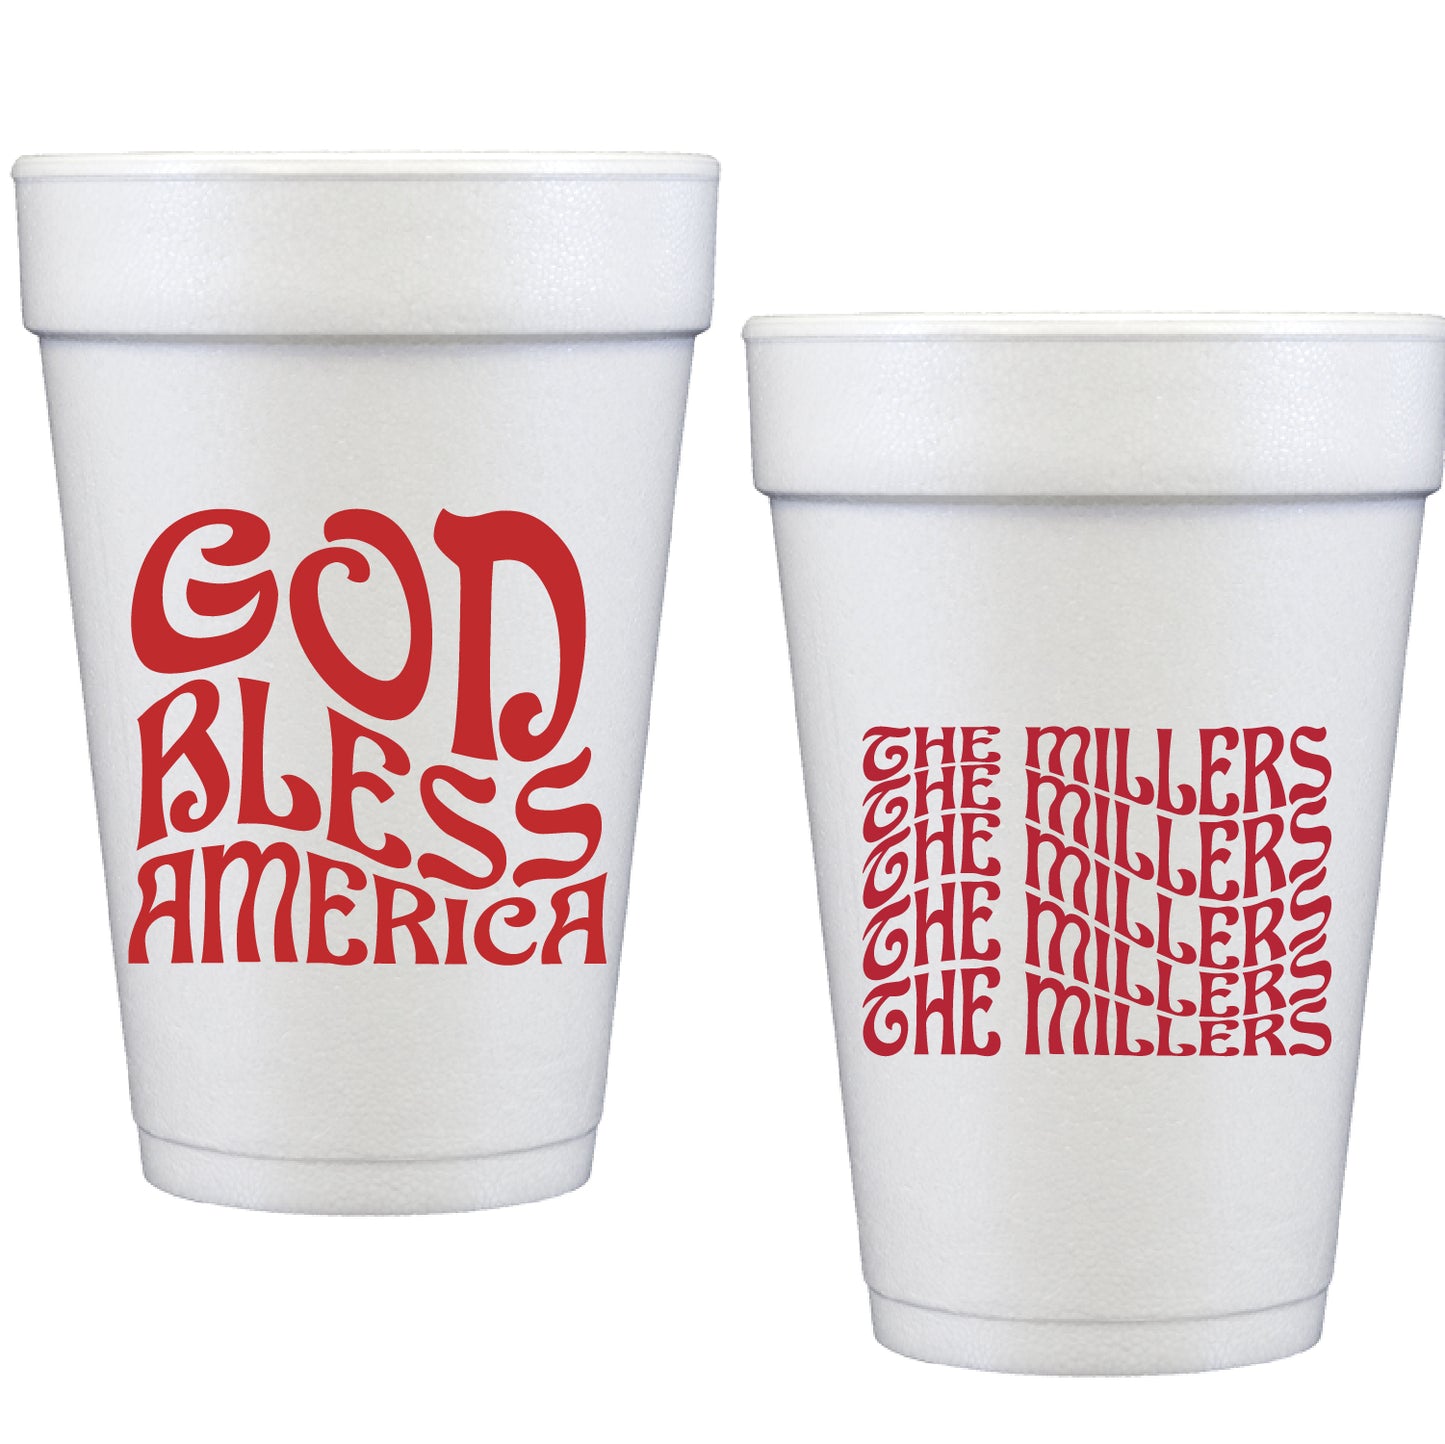 groovy god bless america | styrofoam cups